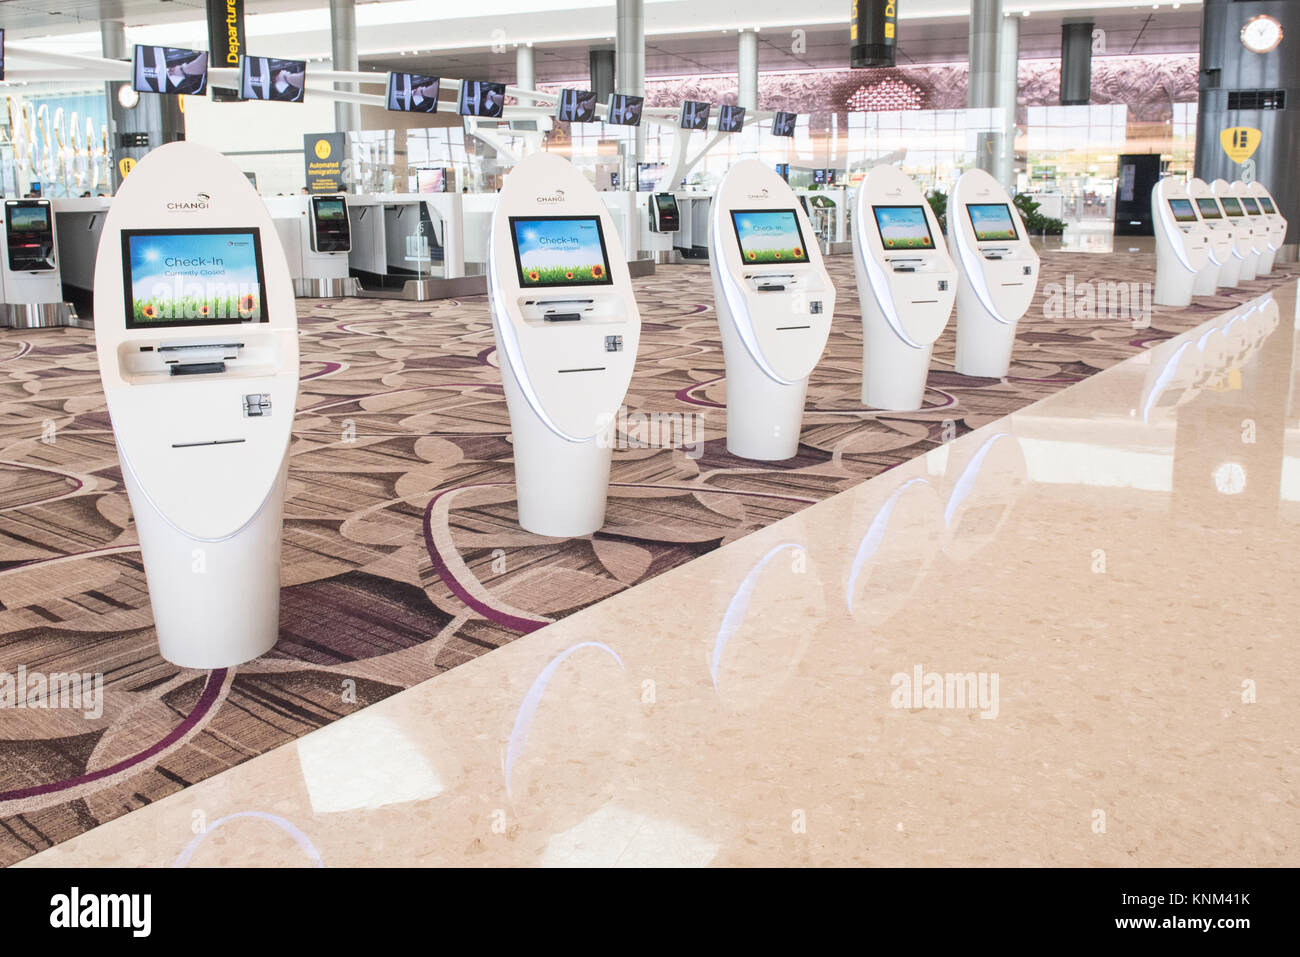 Terminal 4, Changi International Airport - Airport Technology